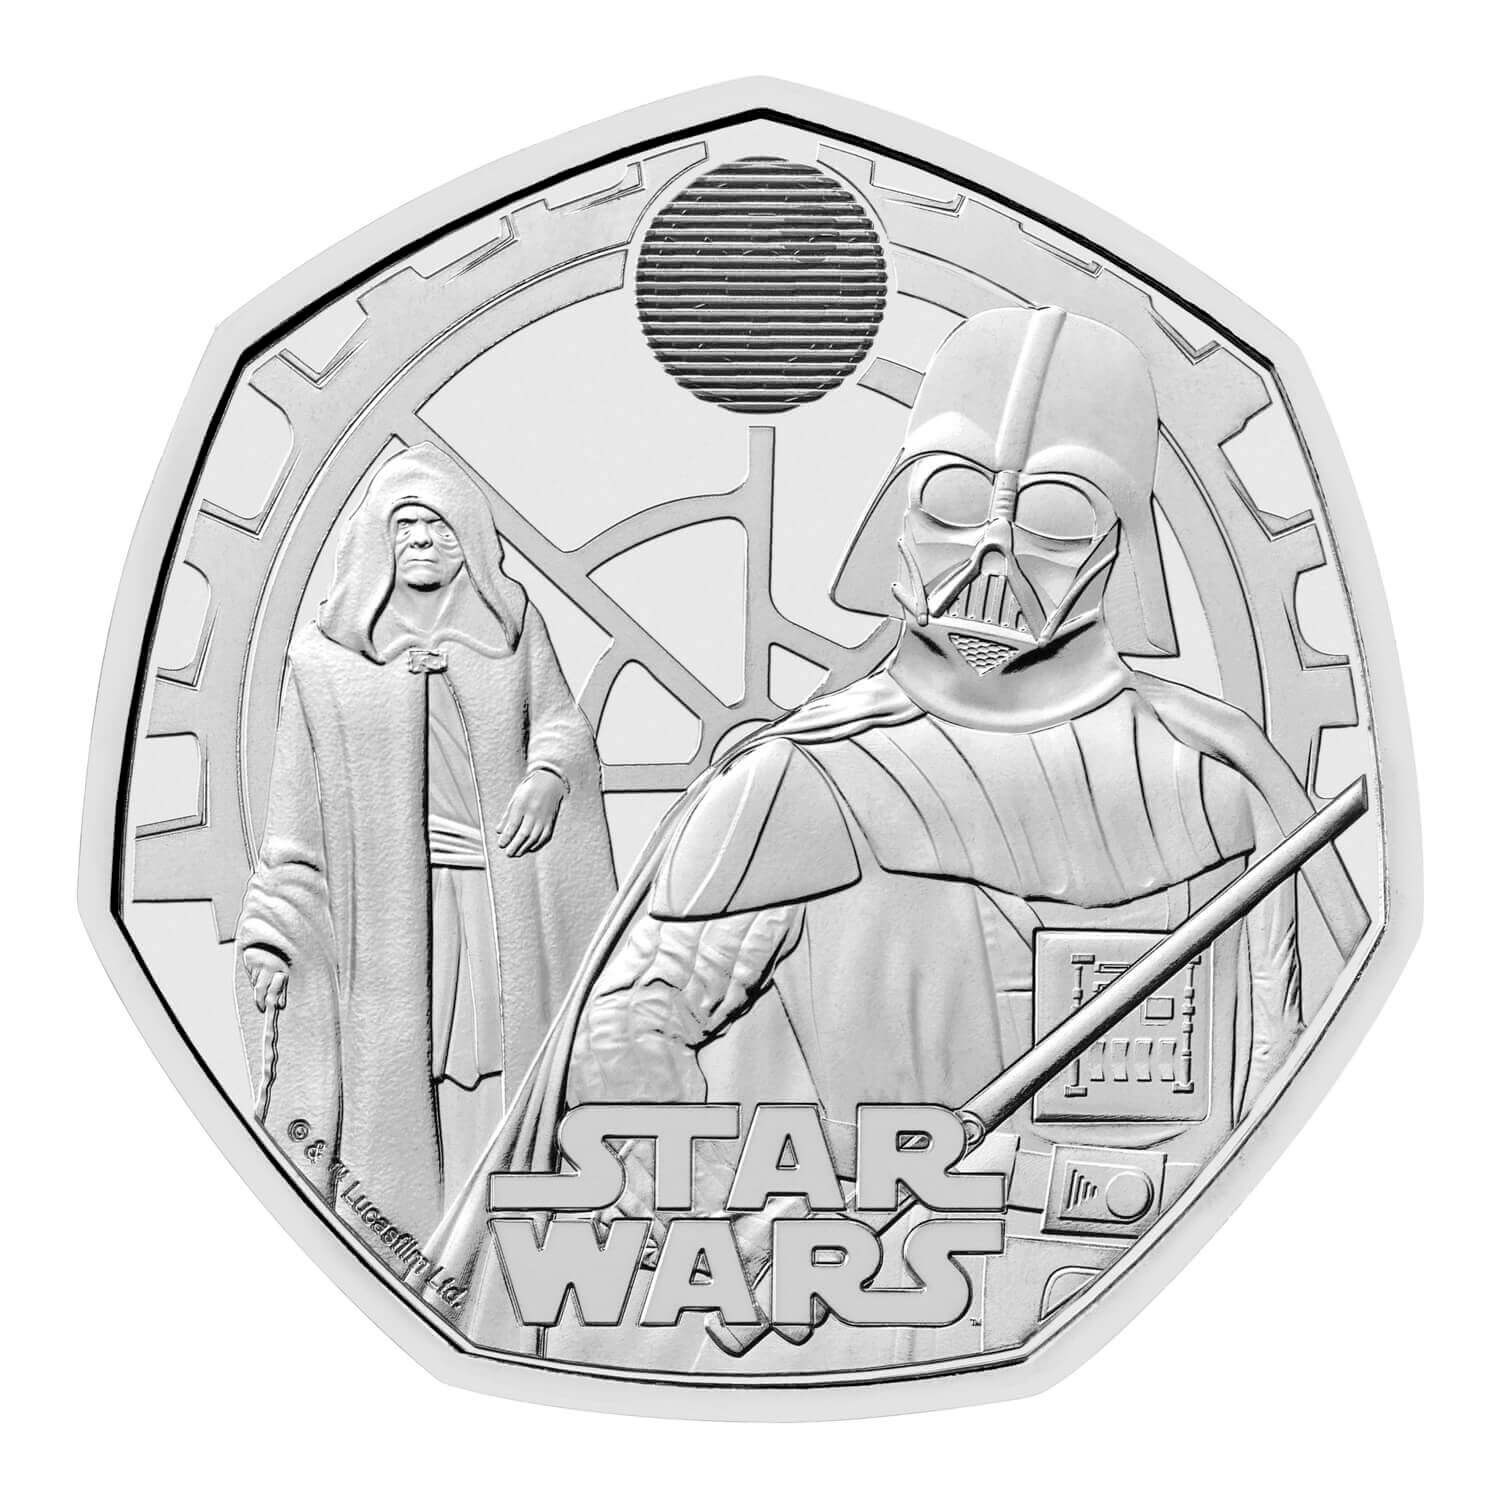 (W185.50.P.2023.UK23DVBU) United Kingdom 50 Pence Star Wars (Darth Vader and Emperor Palpatine) 2023 BU Reverse (zoom)